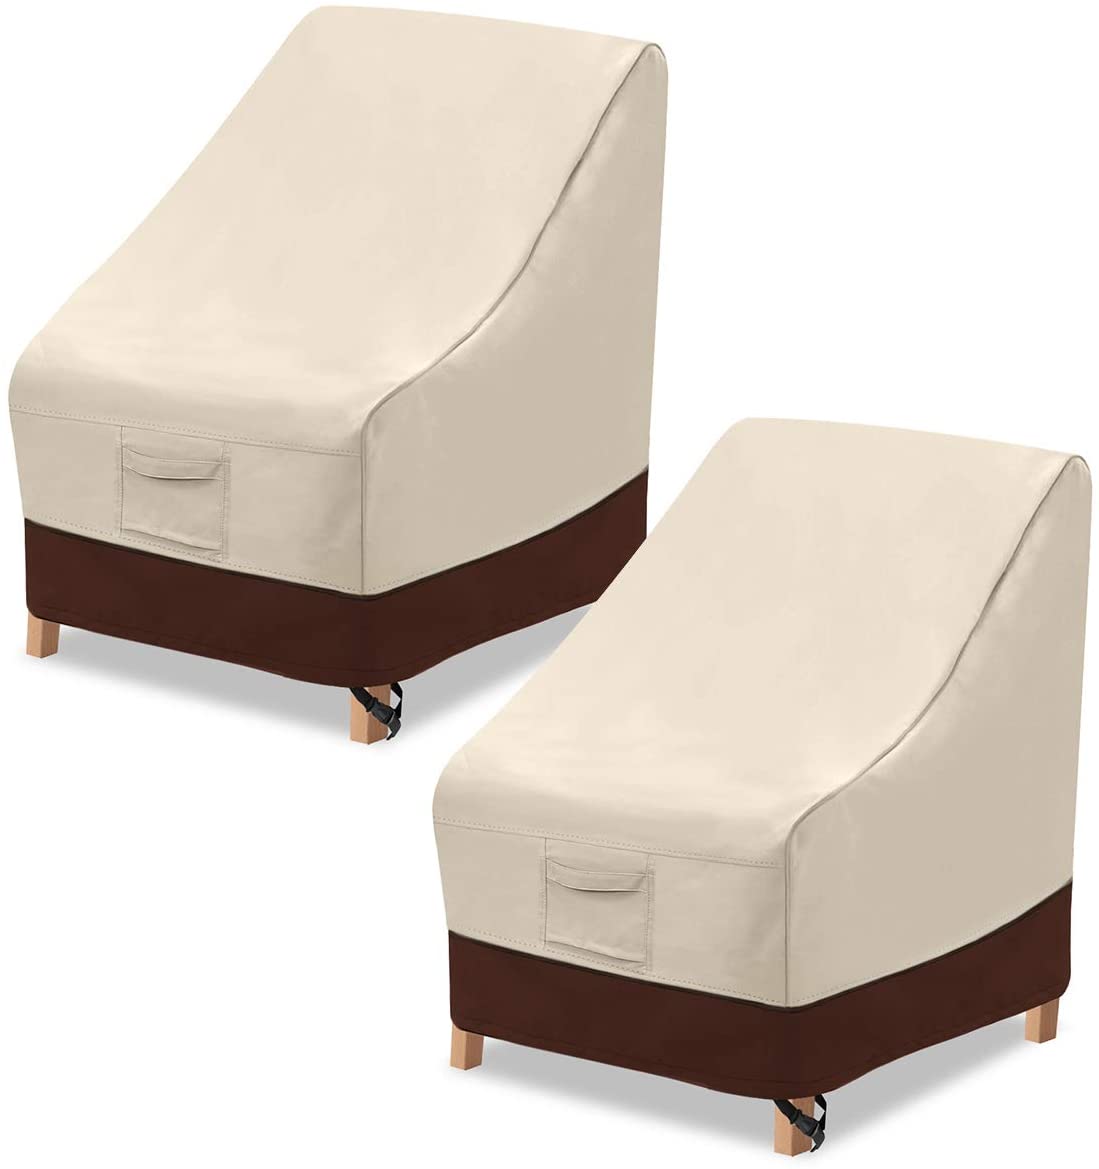 Furniture Exterior Edging Dust Cover Para sa Outdoor Garden Sofa Chairs Non-Woven Fabric Coating With PE